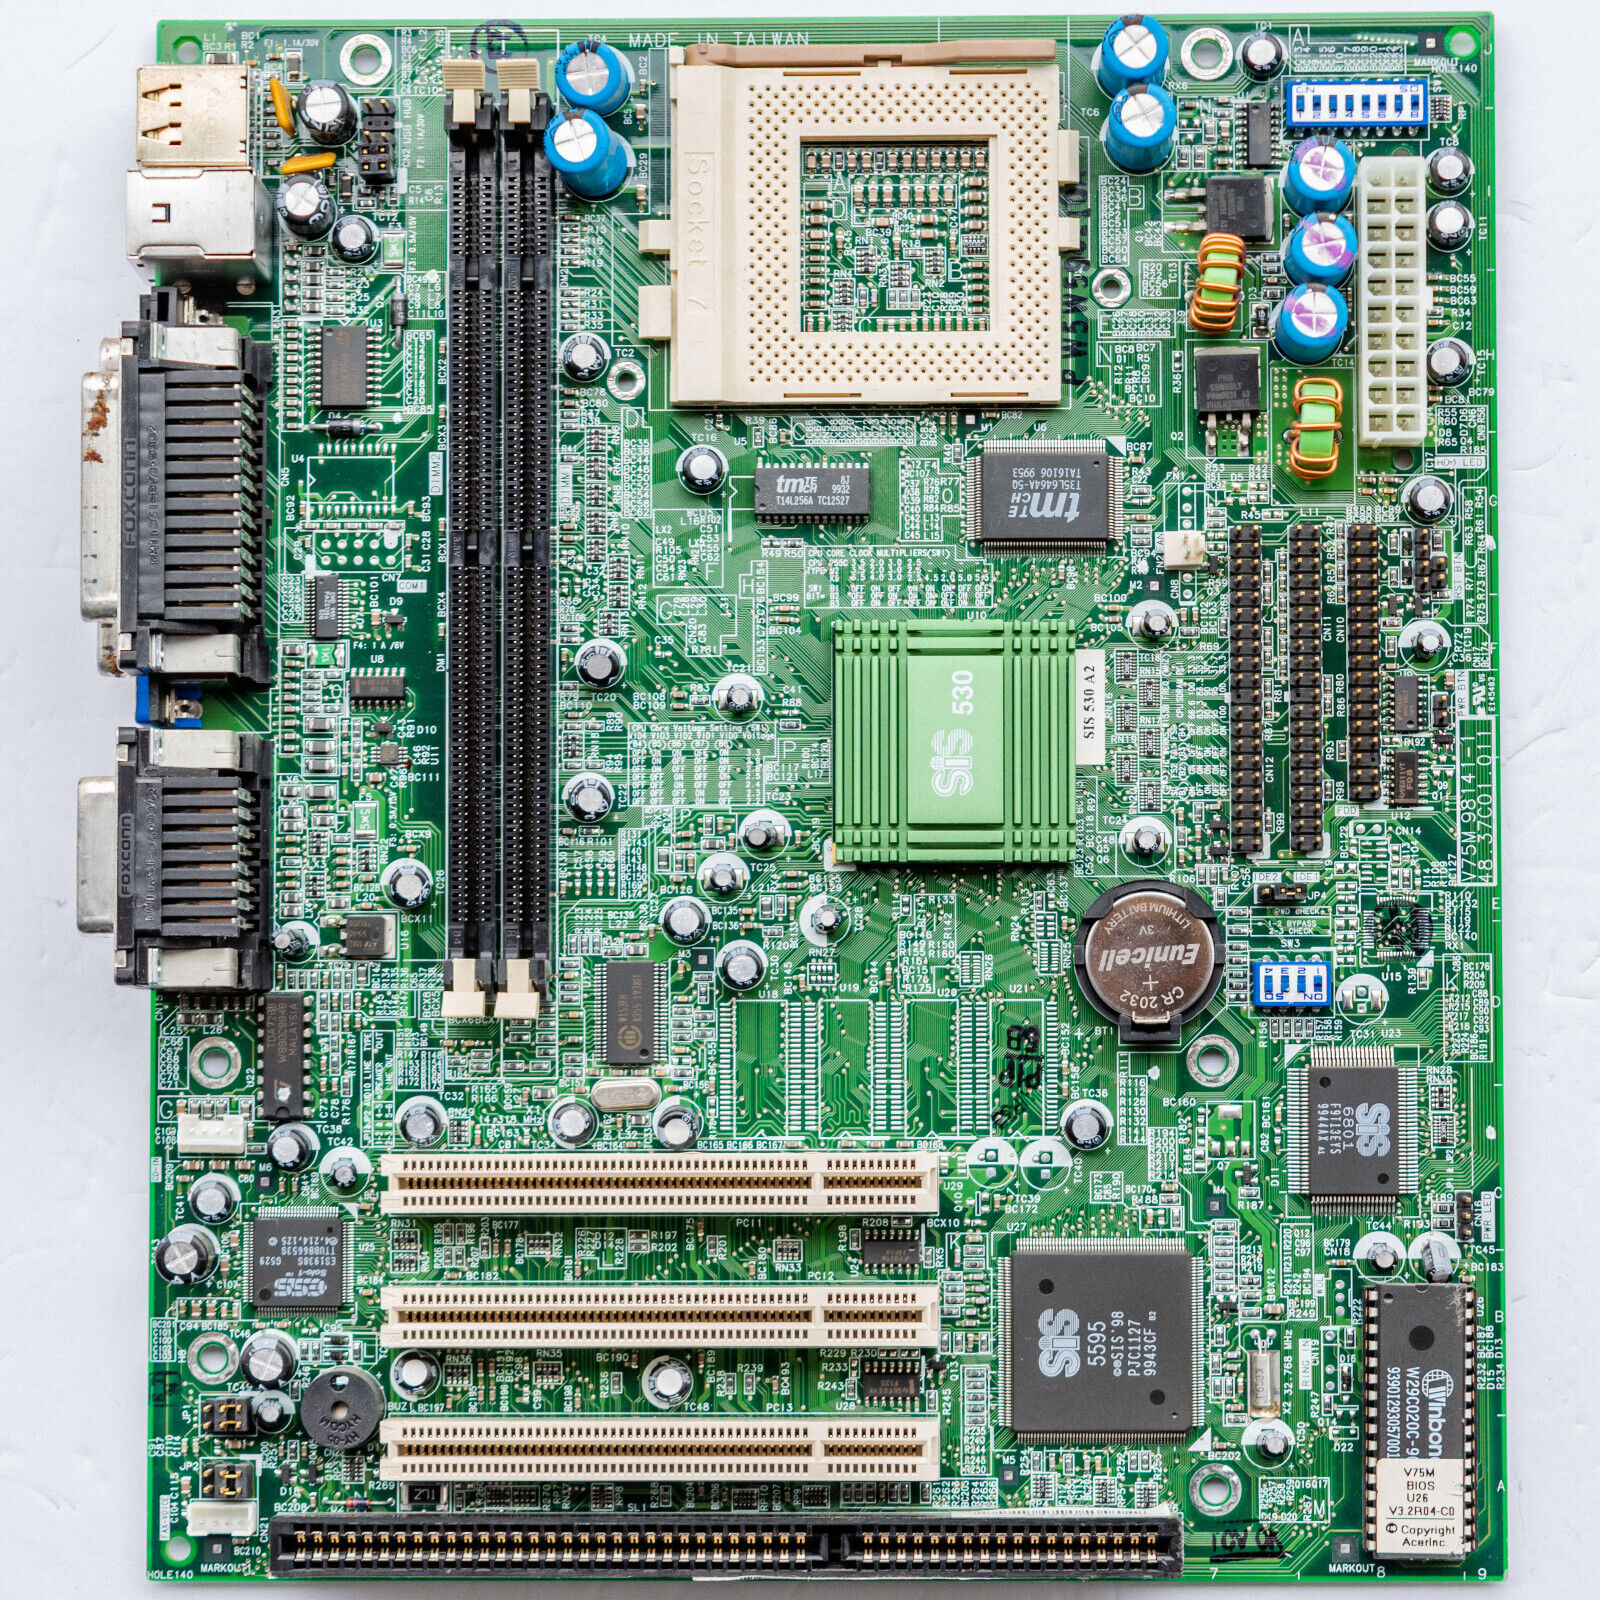 IBM V75M SiS 530 Socket 7 Motherboard ISA Slot AMD K6 Windows 98 SE Retro Gaming